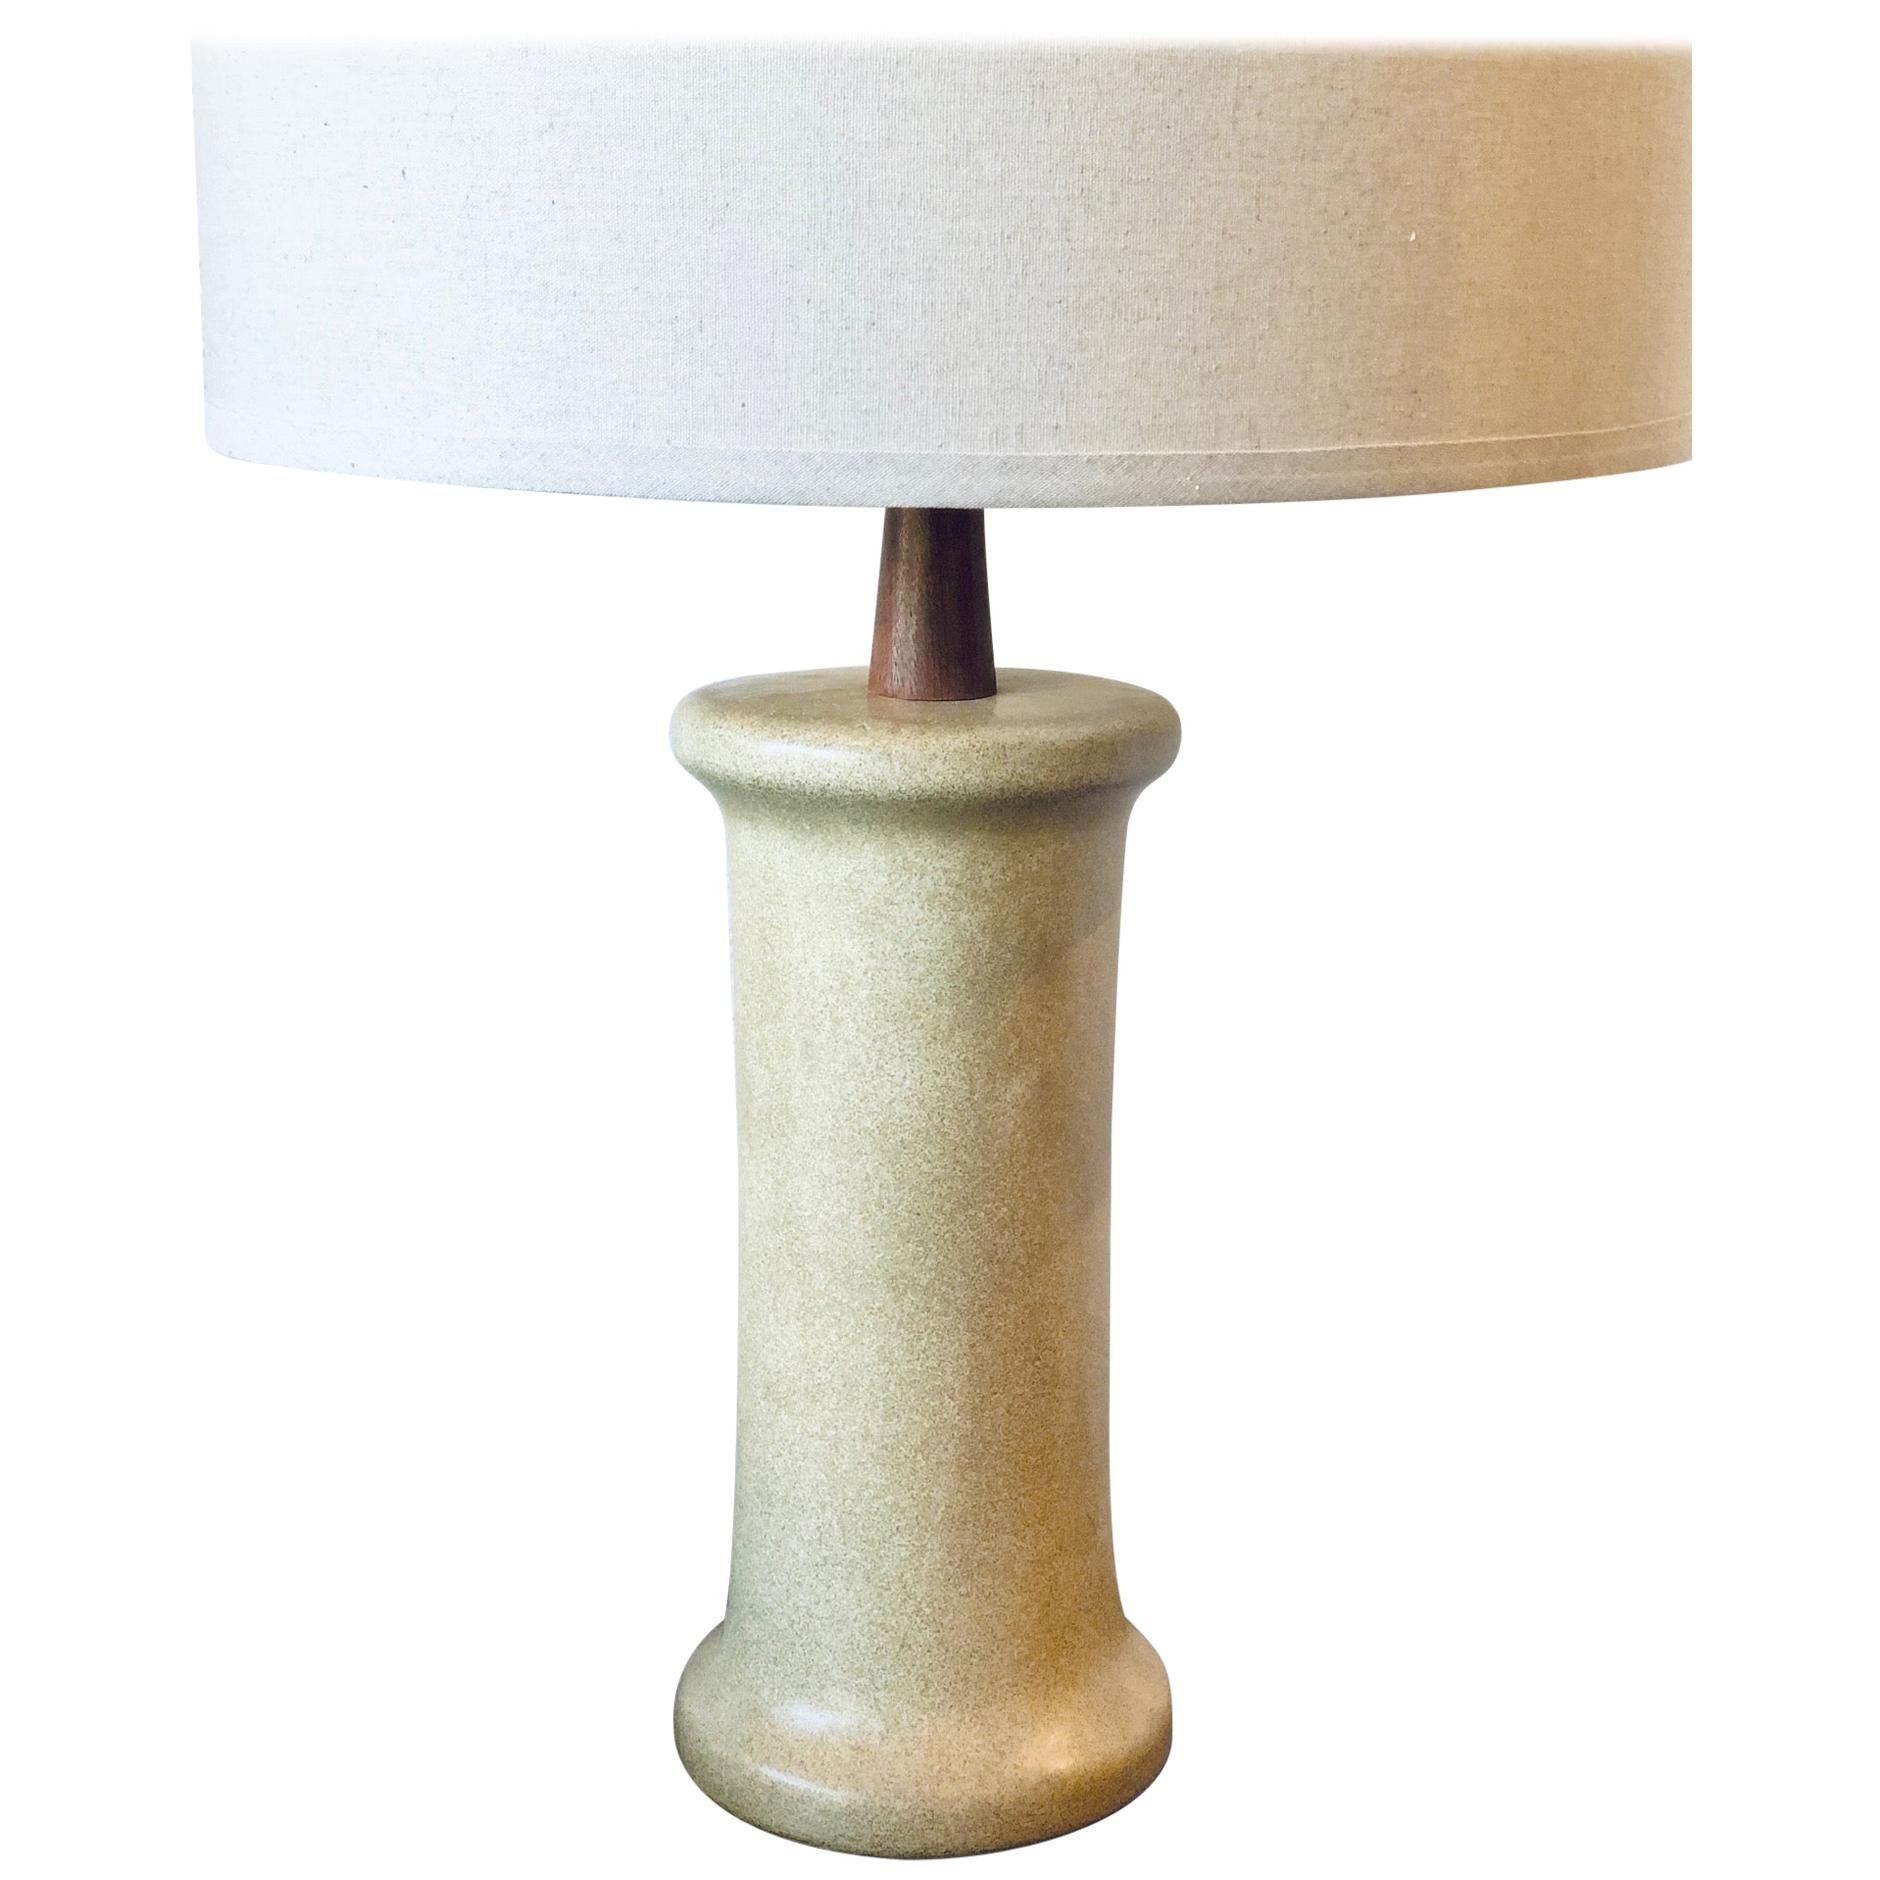 American Mid-Century Modern Table Lamp by Gordon Martz for Marshall Studios